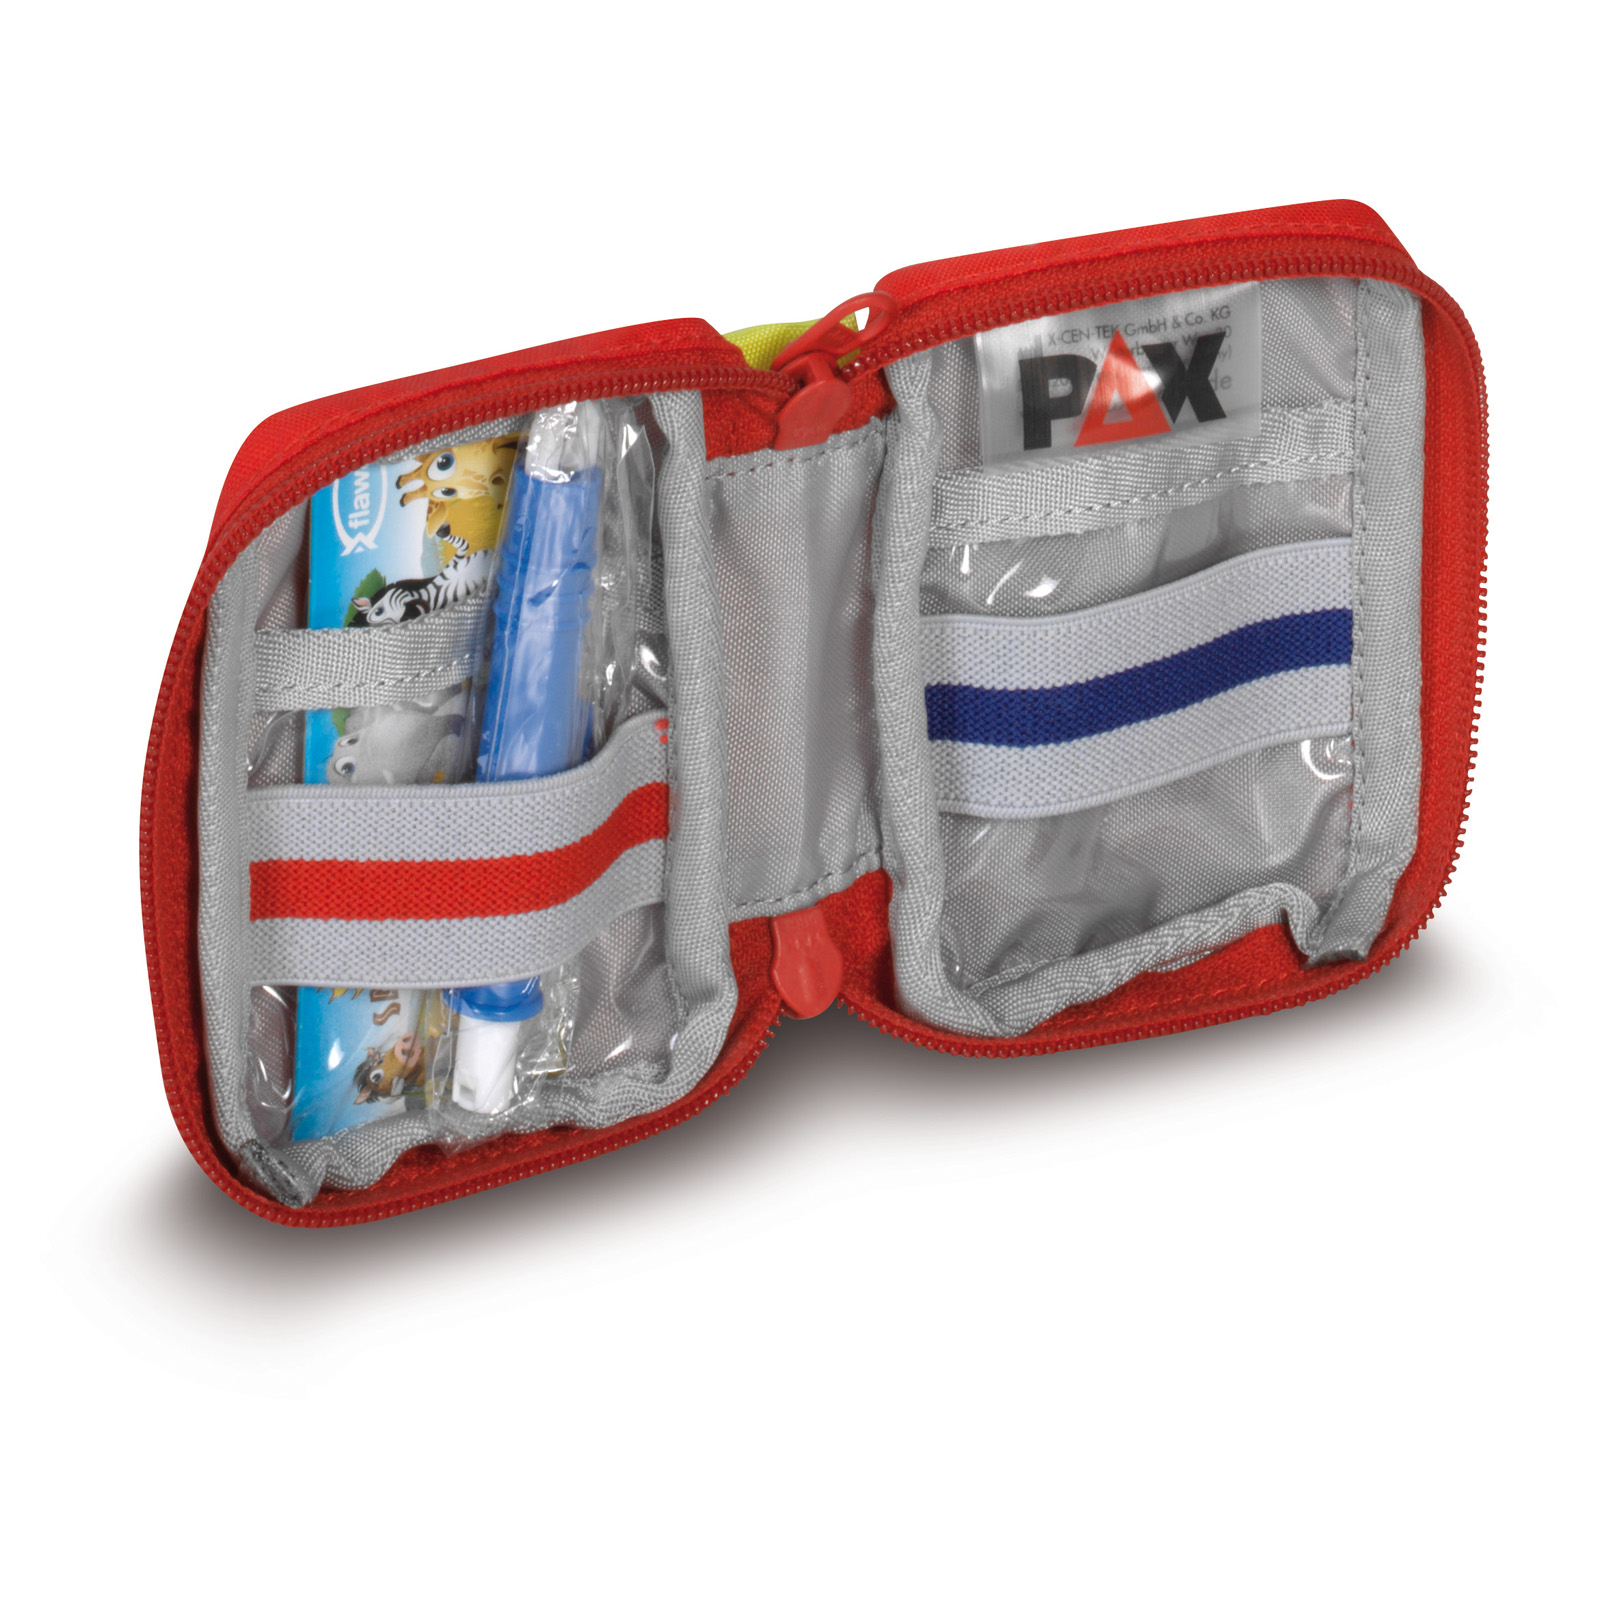 Erste-Hilfe-Tasche XS paxlight rot - FS Medizintechnik Handels GmbH, Rettungsmedizin